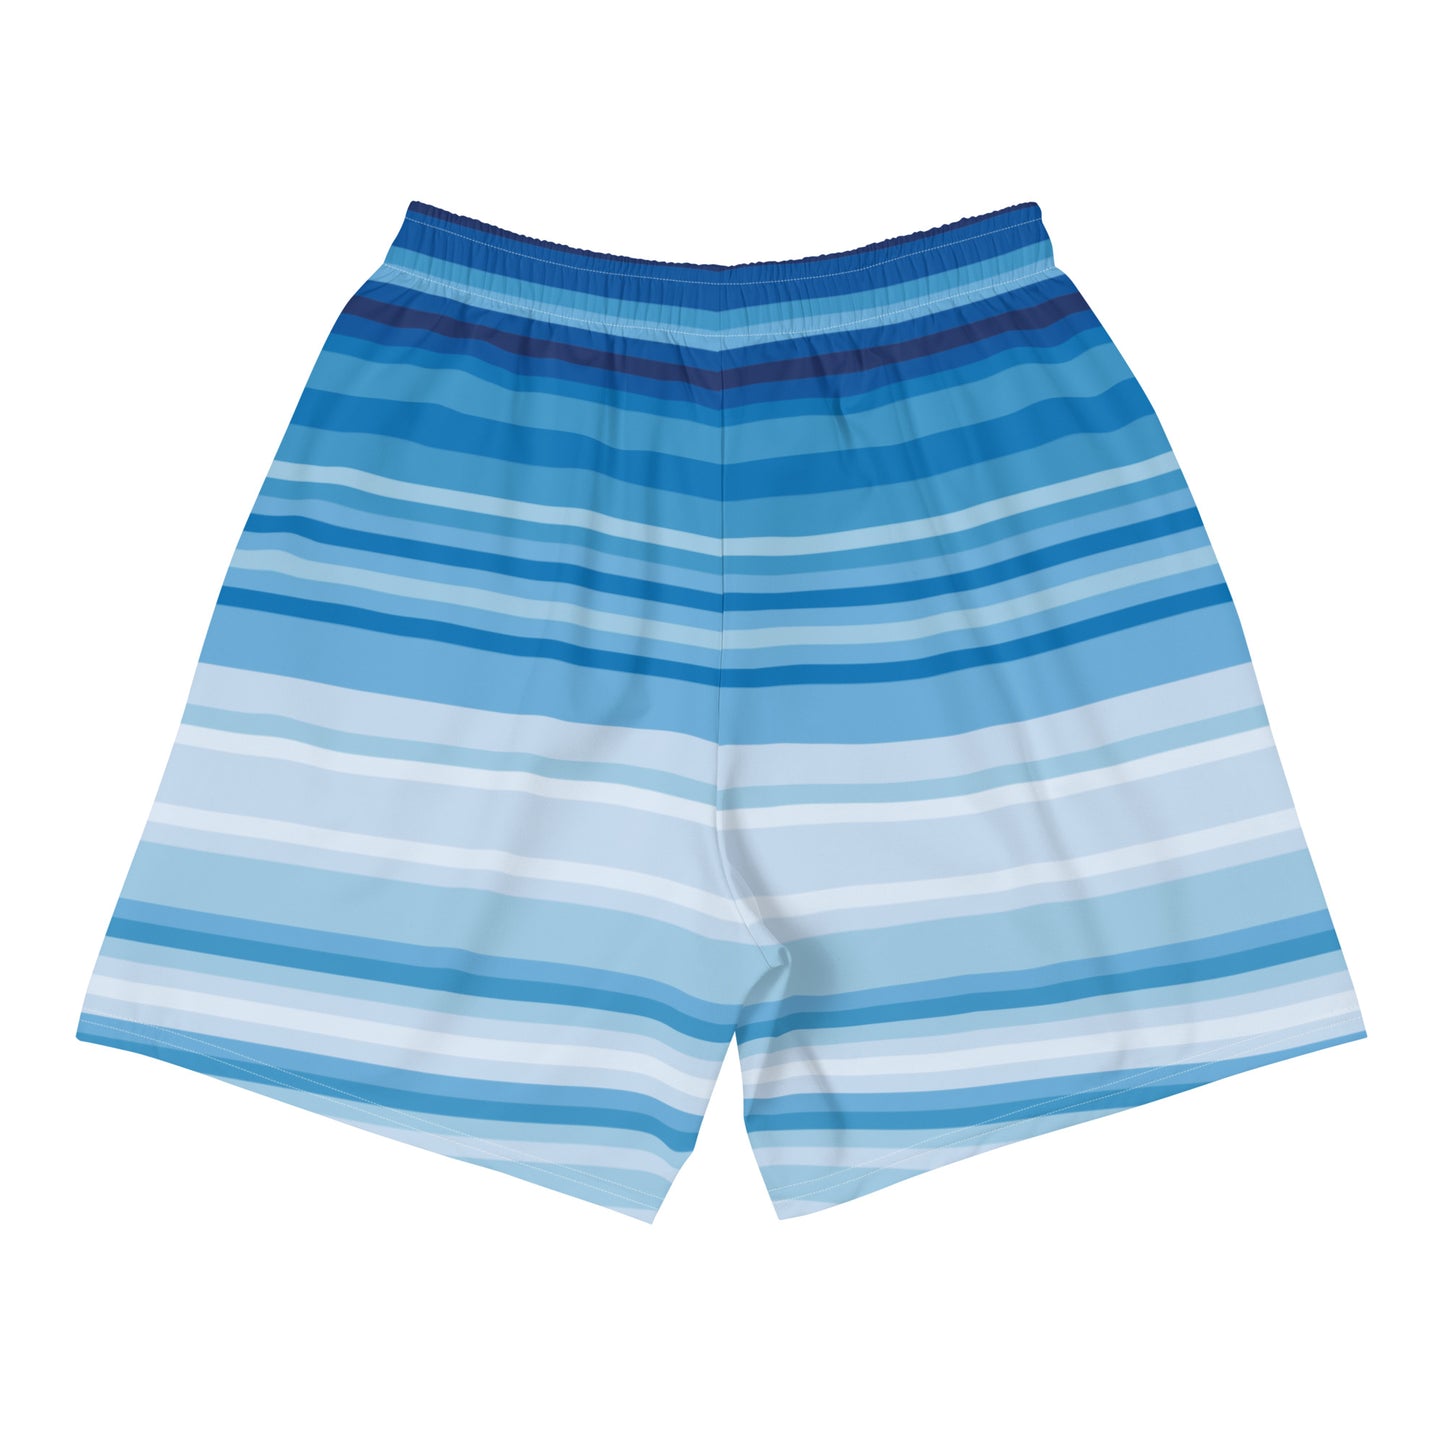 Swift Blue - Sustainably Made Men's Short